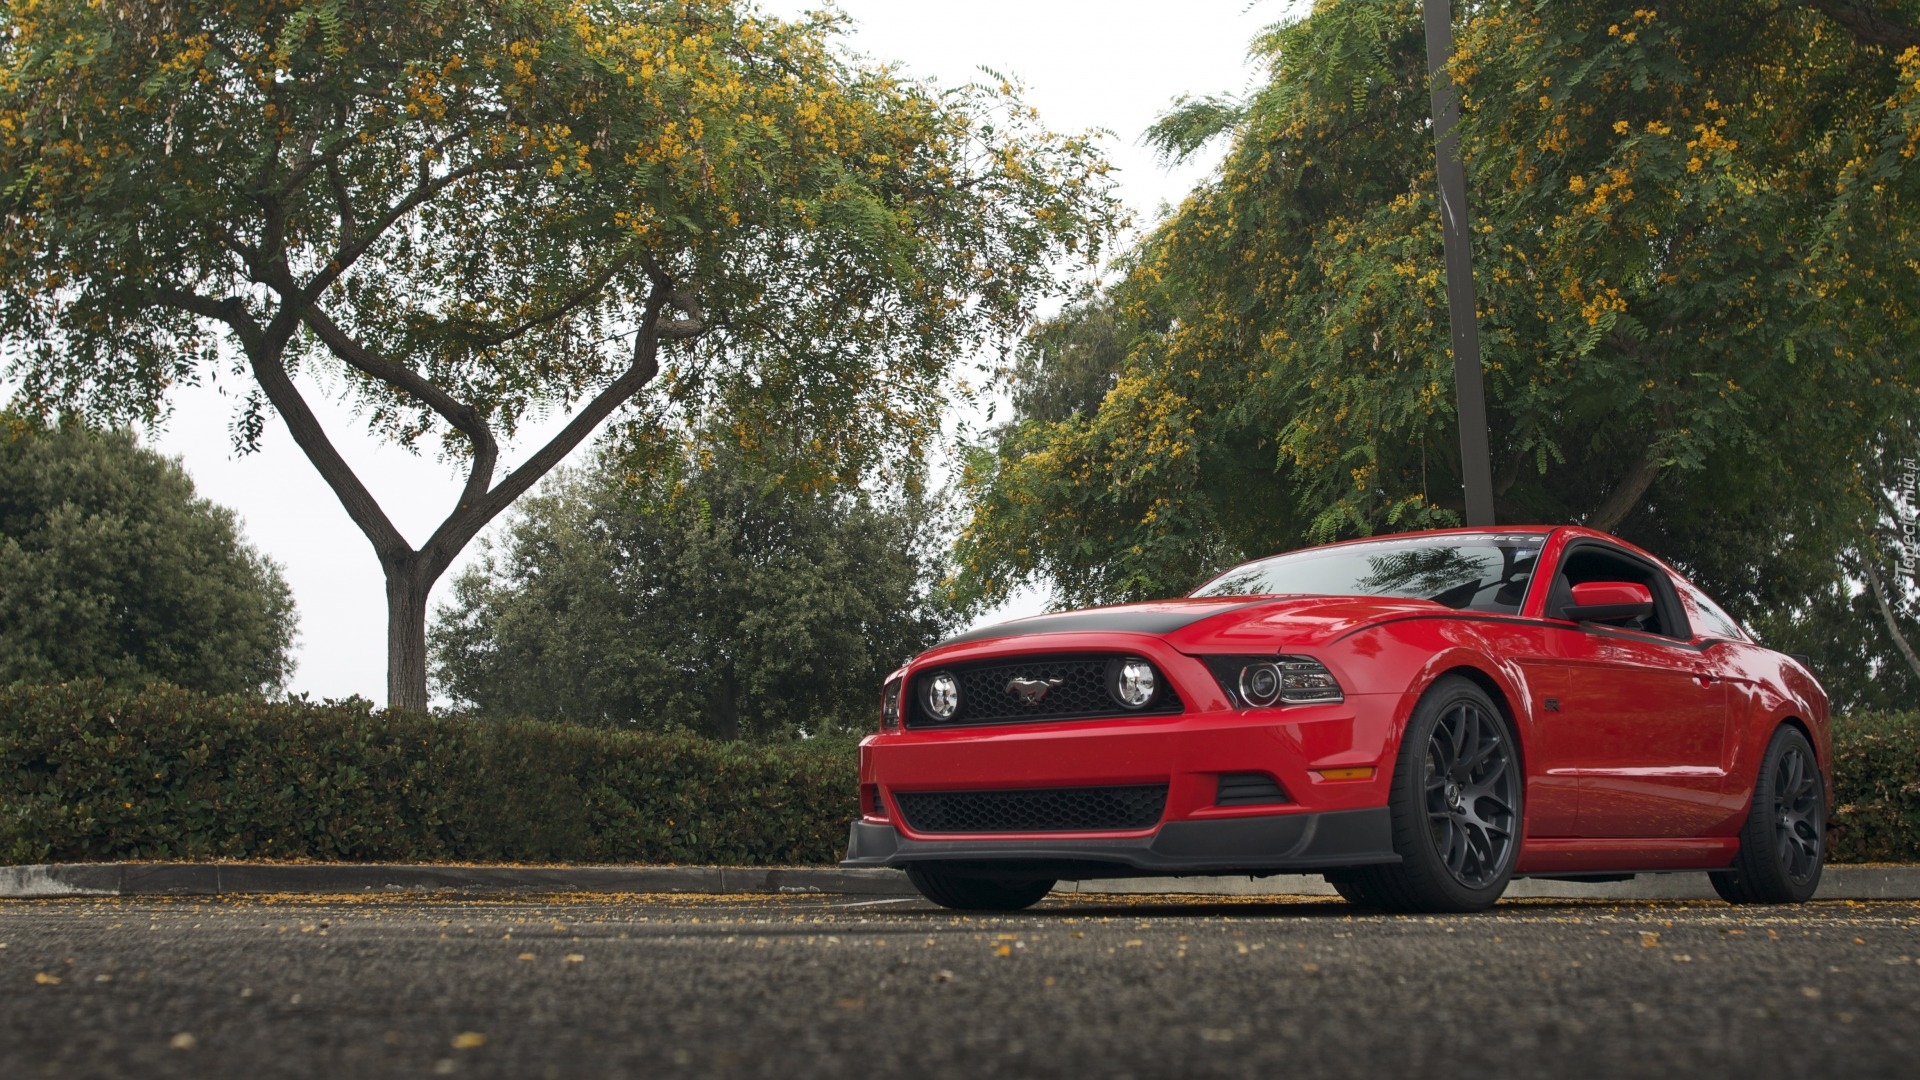 Ford Mustang, 2013, Czerwony